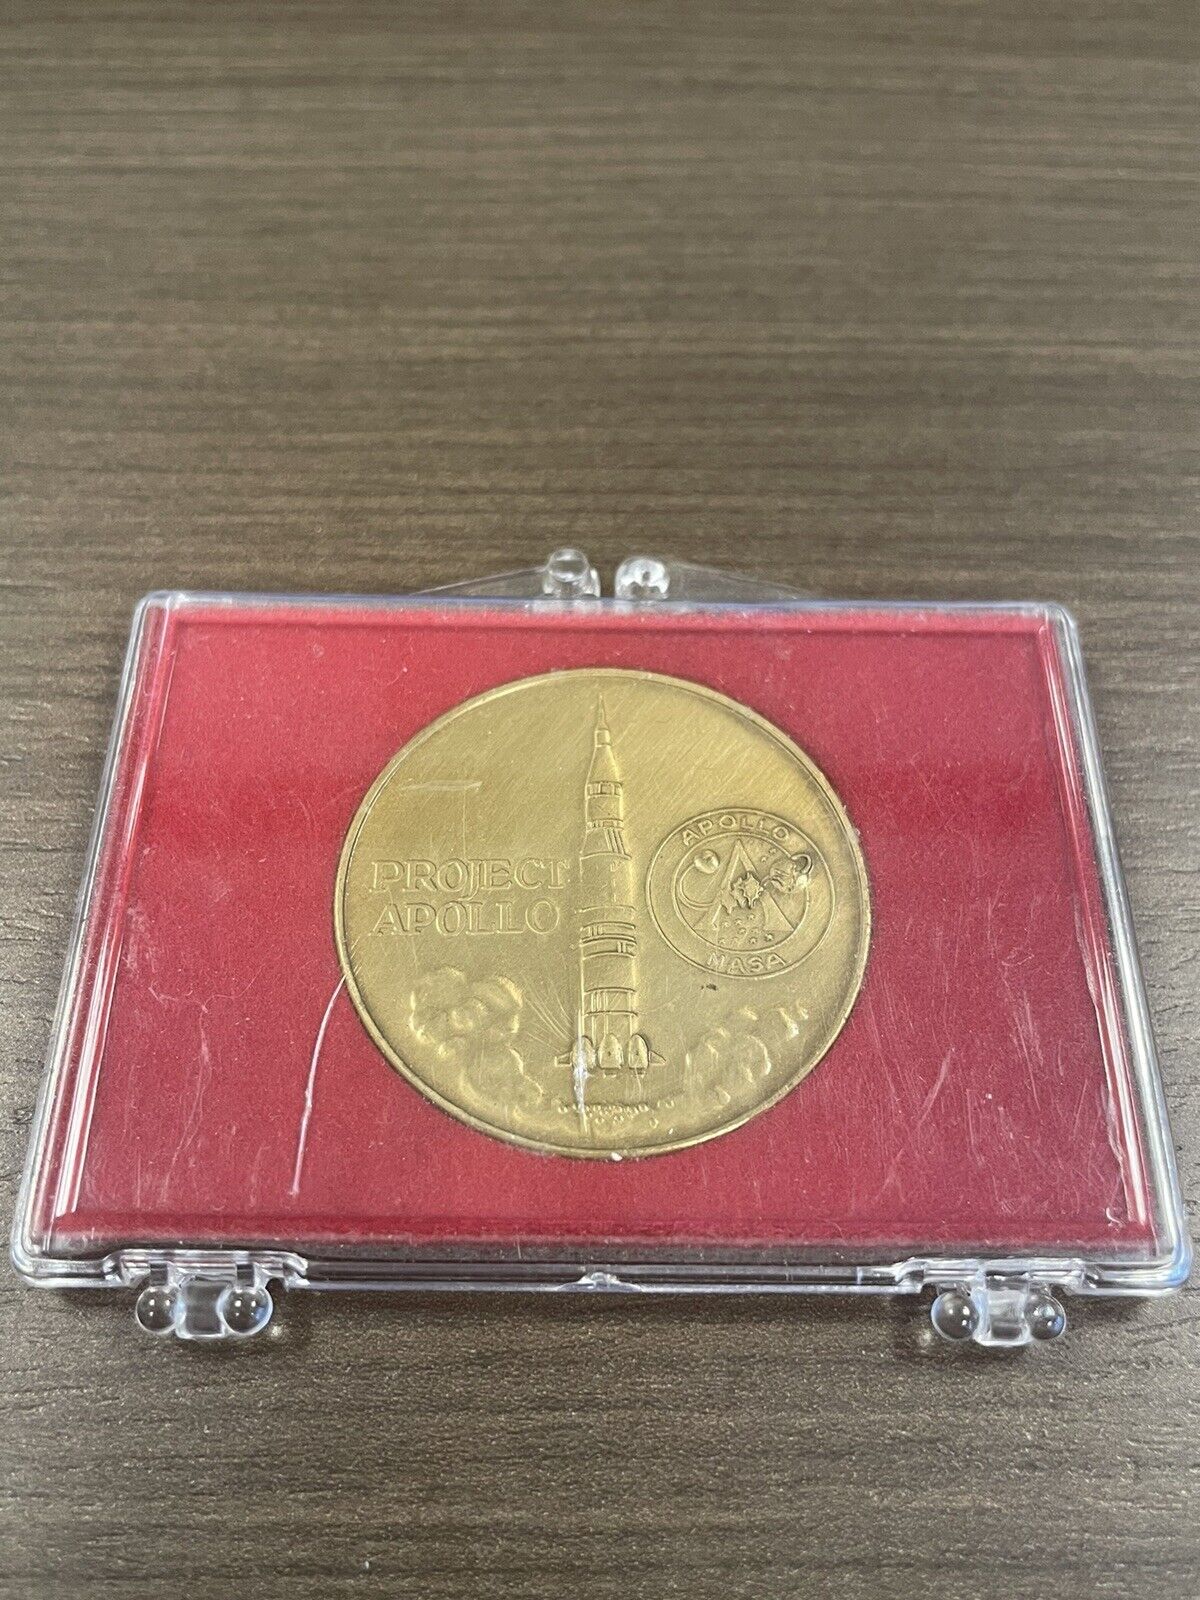 Apollo 11 Commemorative Medal Moon Landing Coin July 16th 1969 Project Apollo